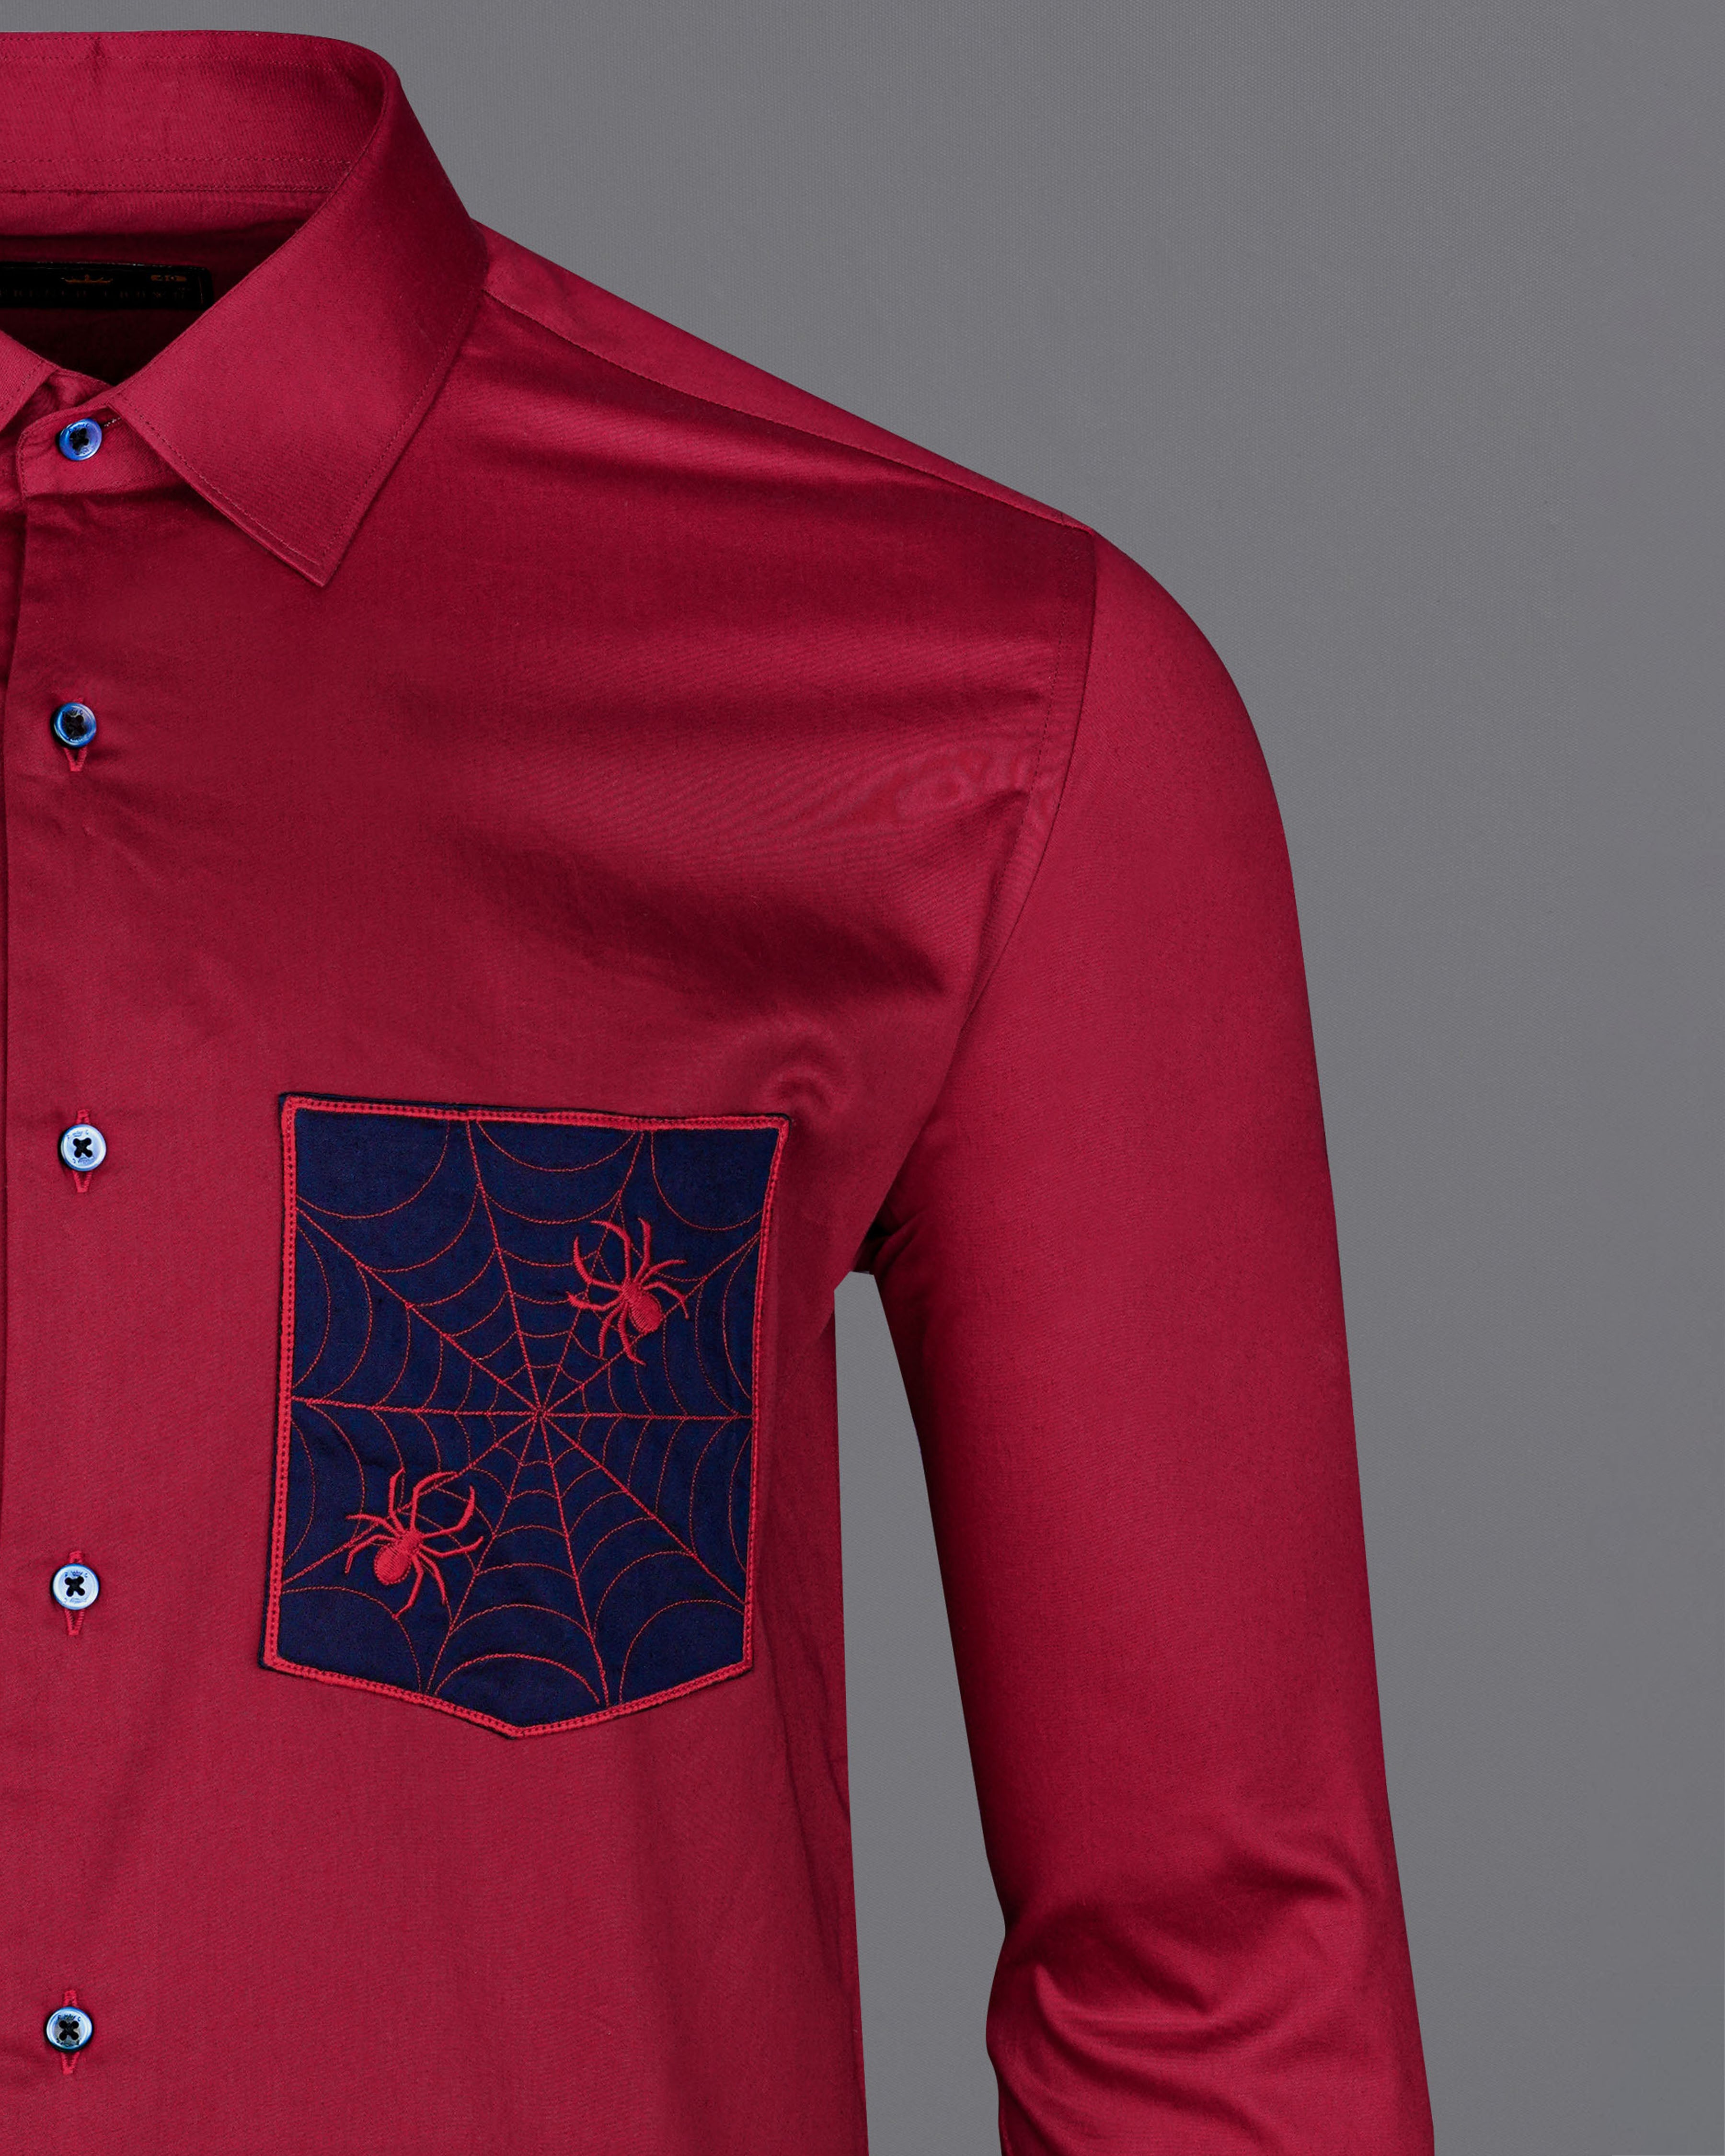 Claret Red with Mirage Blue Patch Subtle Sheen Pocket Spider Embroidered  Super Soft Premium Cotton Shirt 8440-E007-38, 8440-E007-H-38, 8440-E007-39, 8440-E007-H-39, 8440-E007-40, 8440-E007-H-40, 8440-E007-42, 8440-E007-H-42, 8440-E007-44, 8440-E007-H-44, 8440-E007-46, 8440-E007-H-46, 8440-E007-48, 8440-E007-H-48, 8440-E007-50, 8440-E007-H-50, 8440-E007-52, 8440-E007-H-52